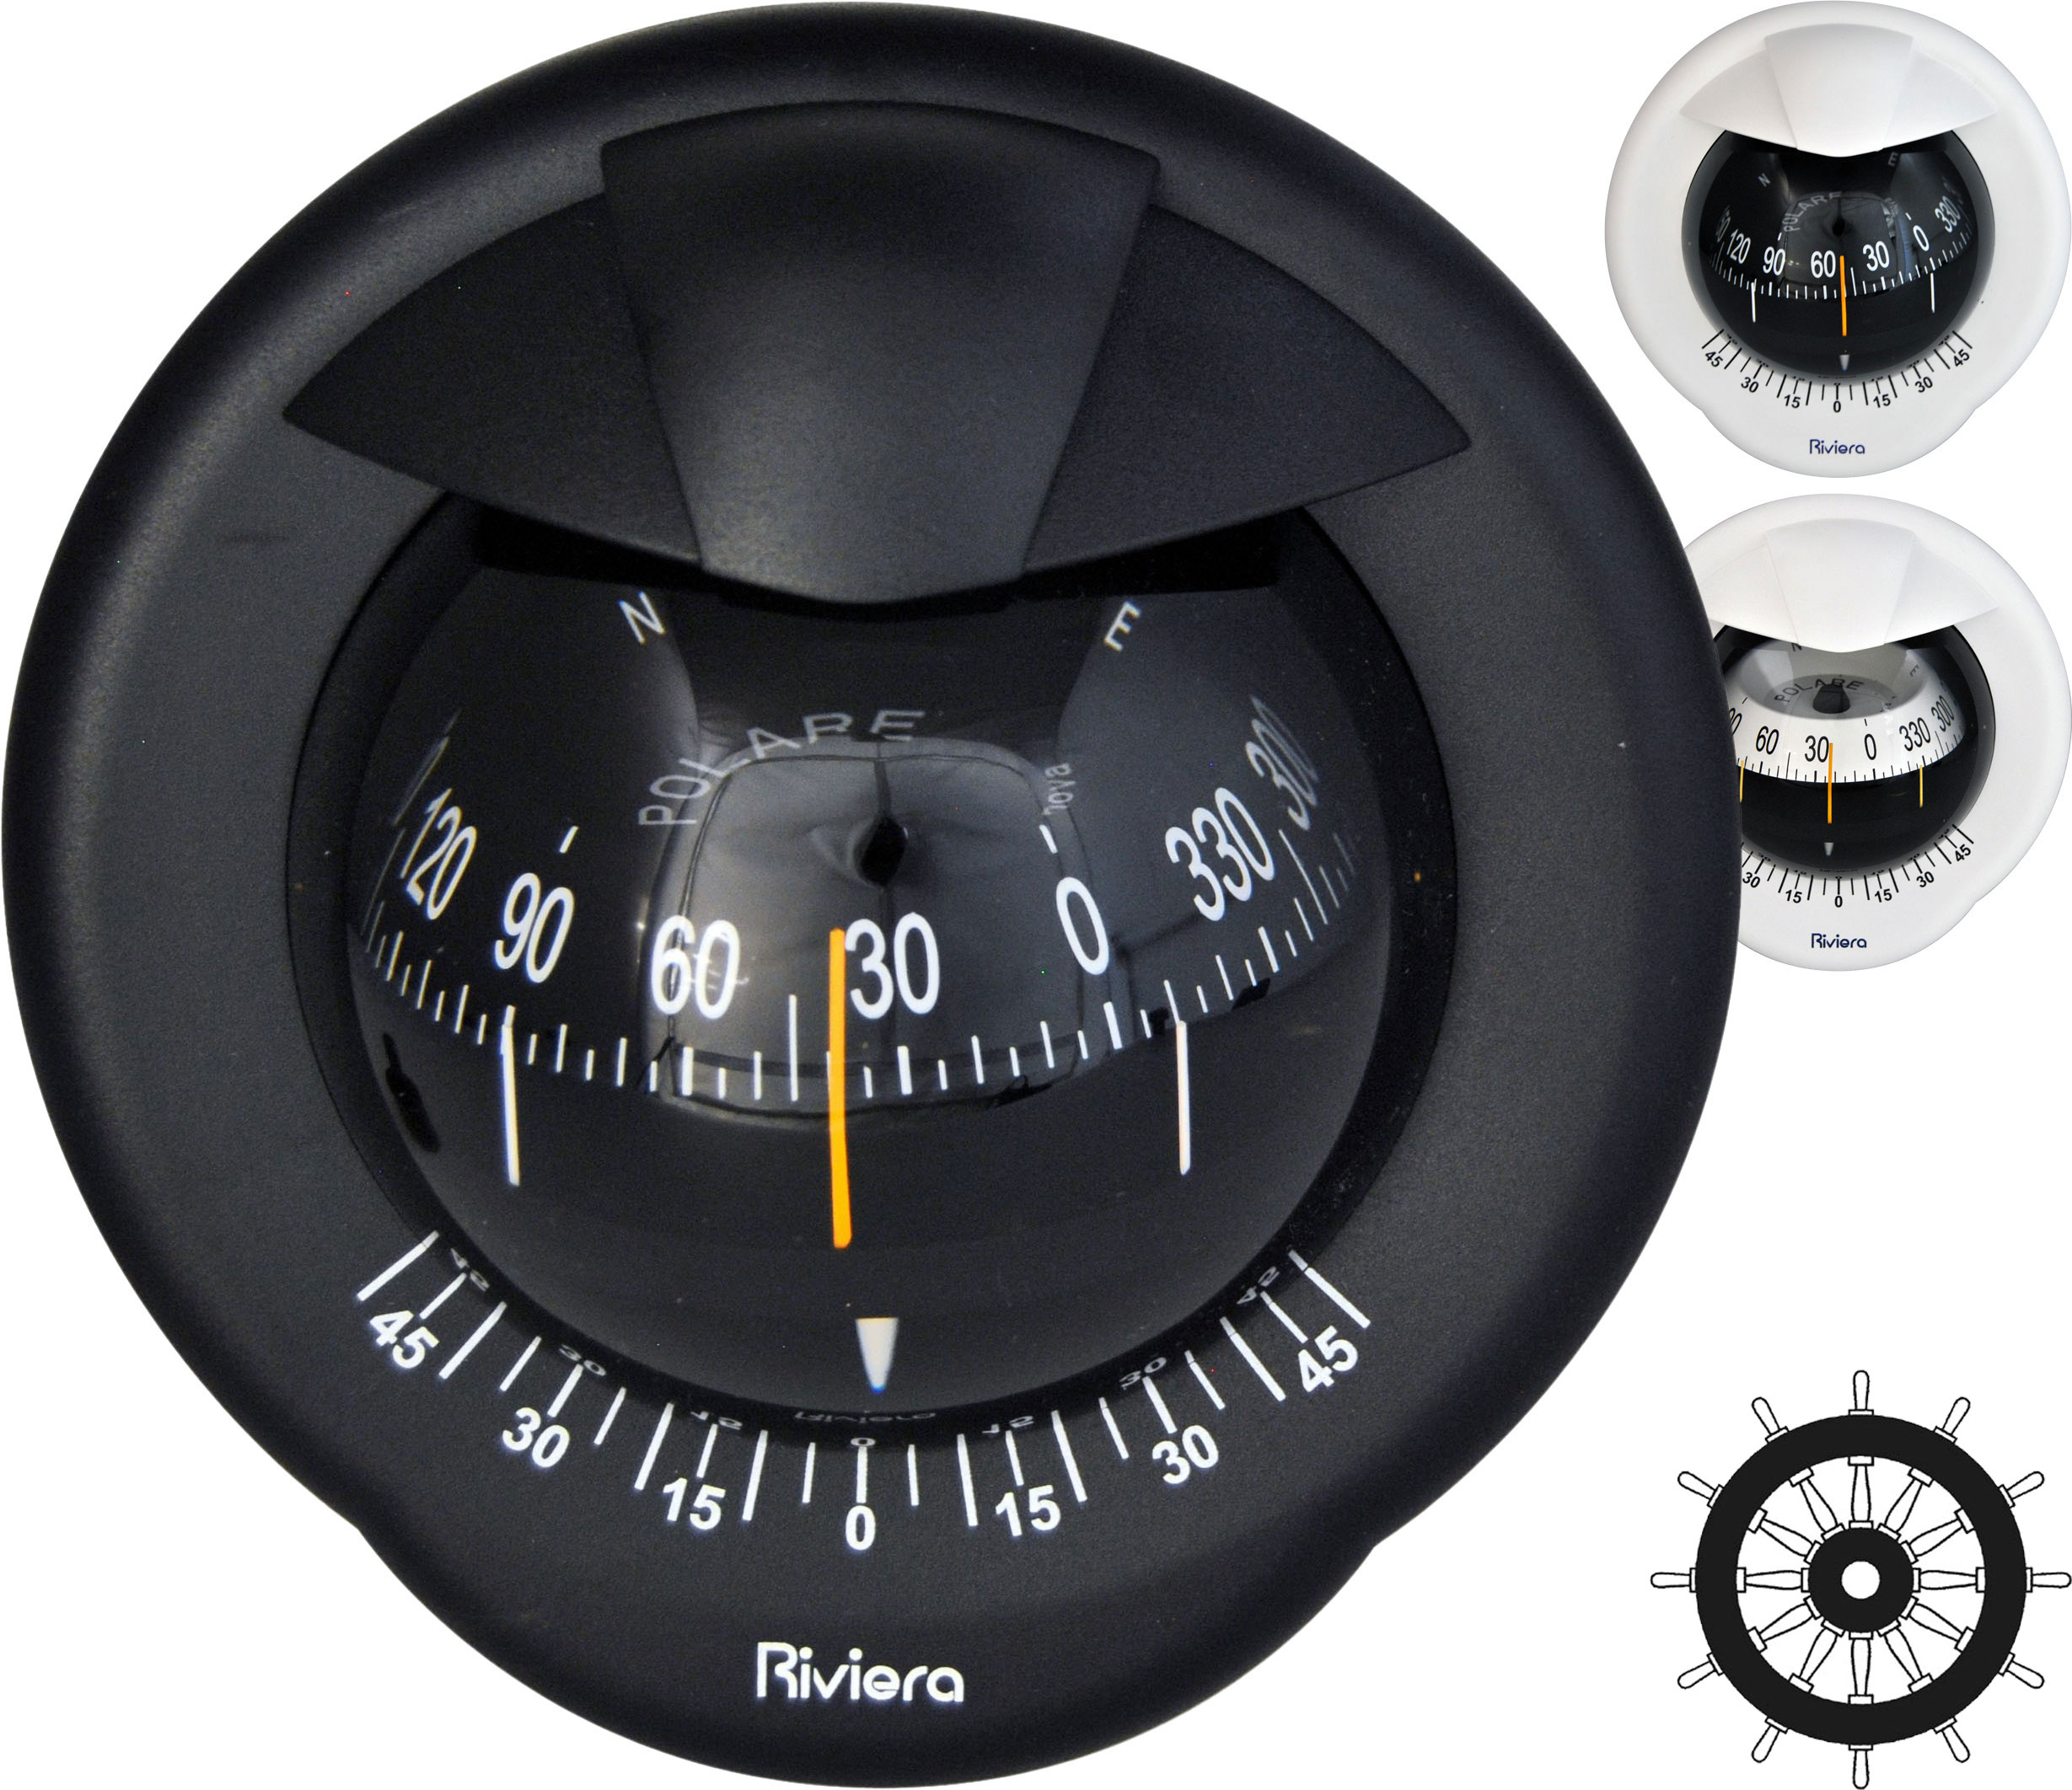 Riviera Polare BP1 kompass for skottmontering